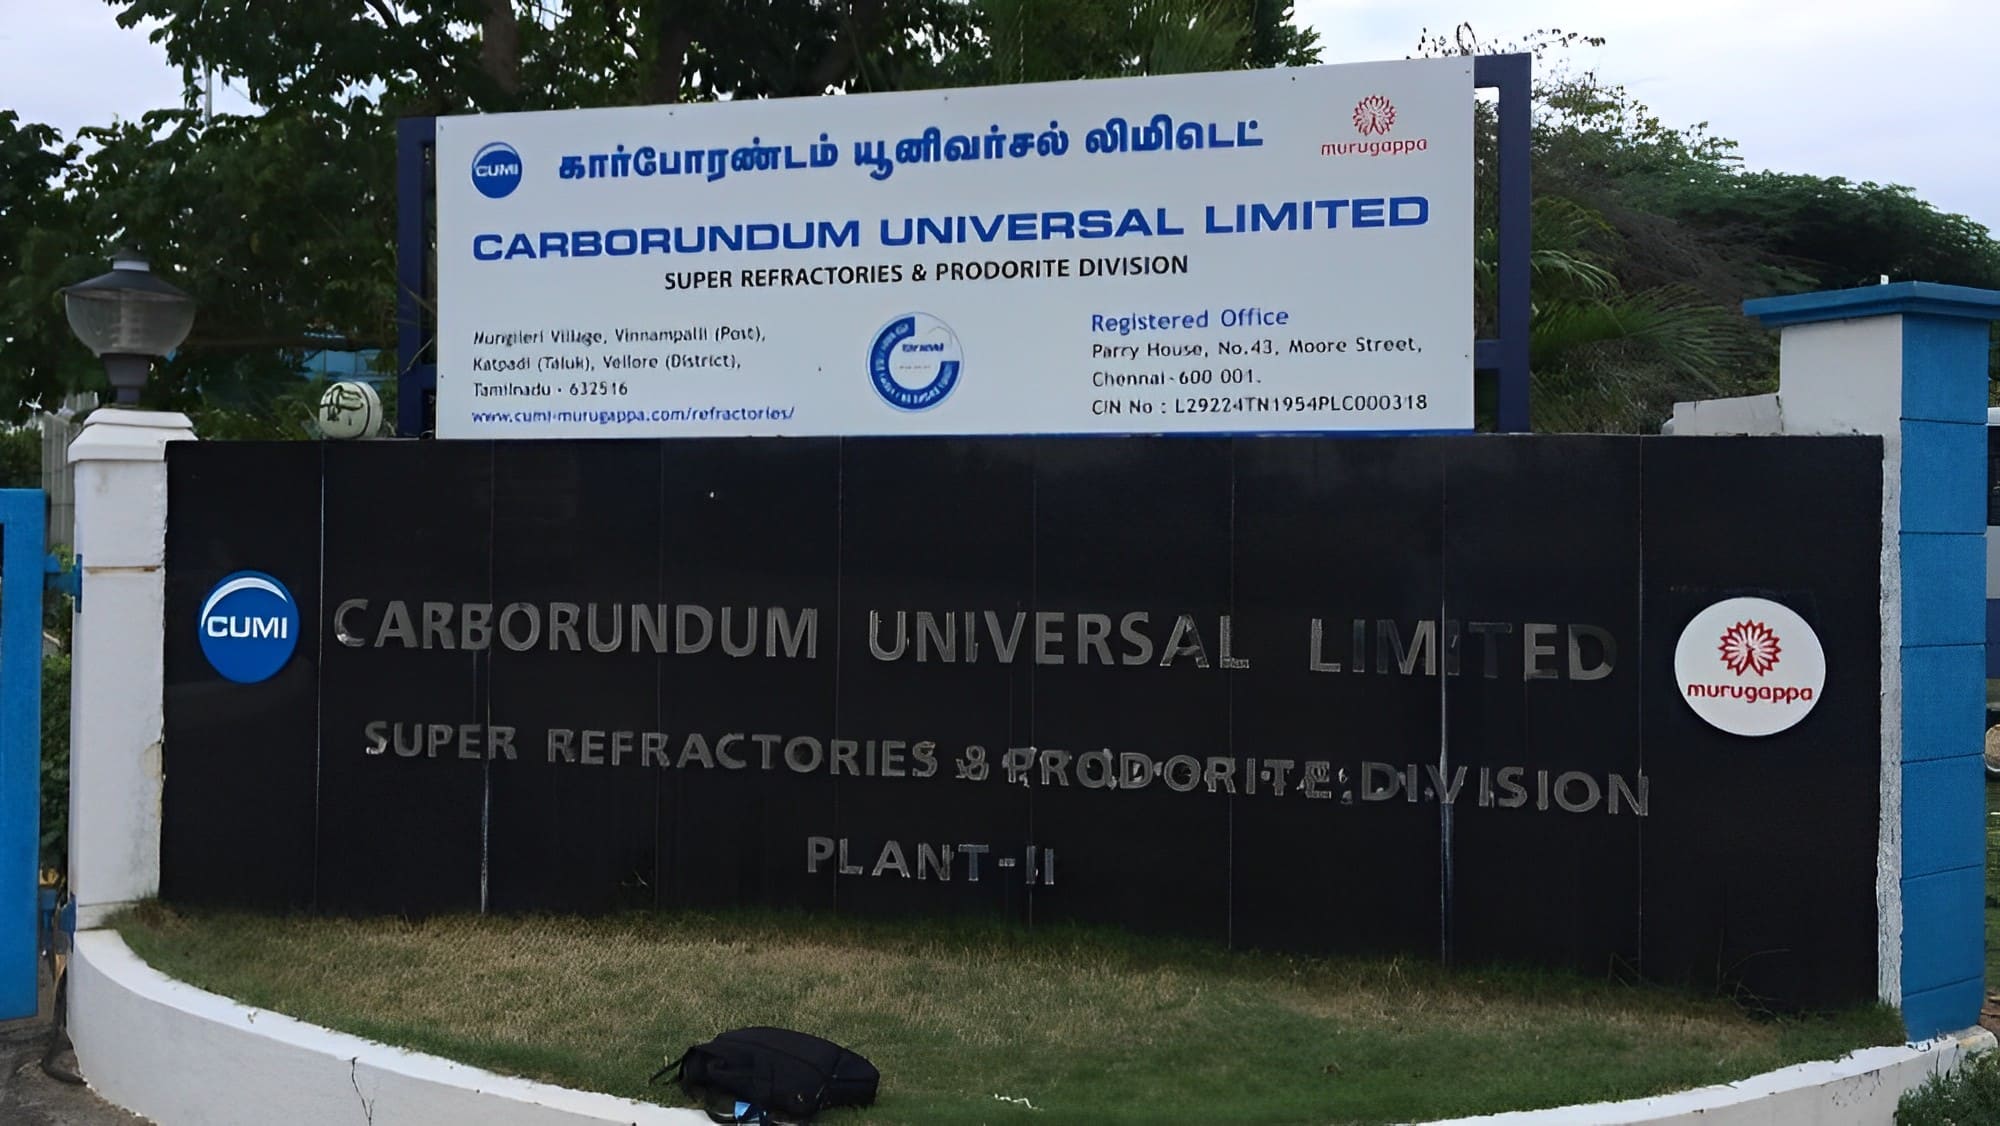 Carborundum Universal Q3FY23 Results: Net Profit of ₹109.11 Cr